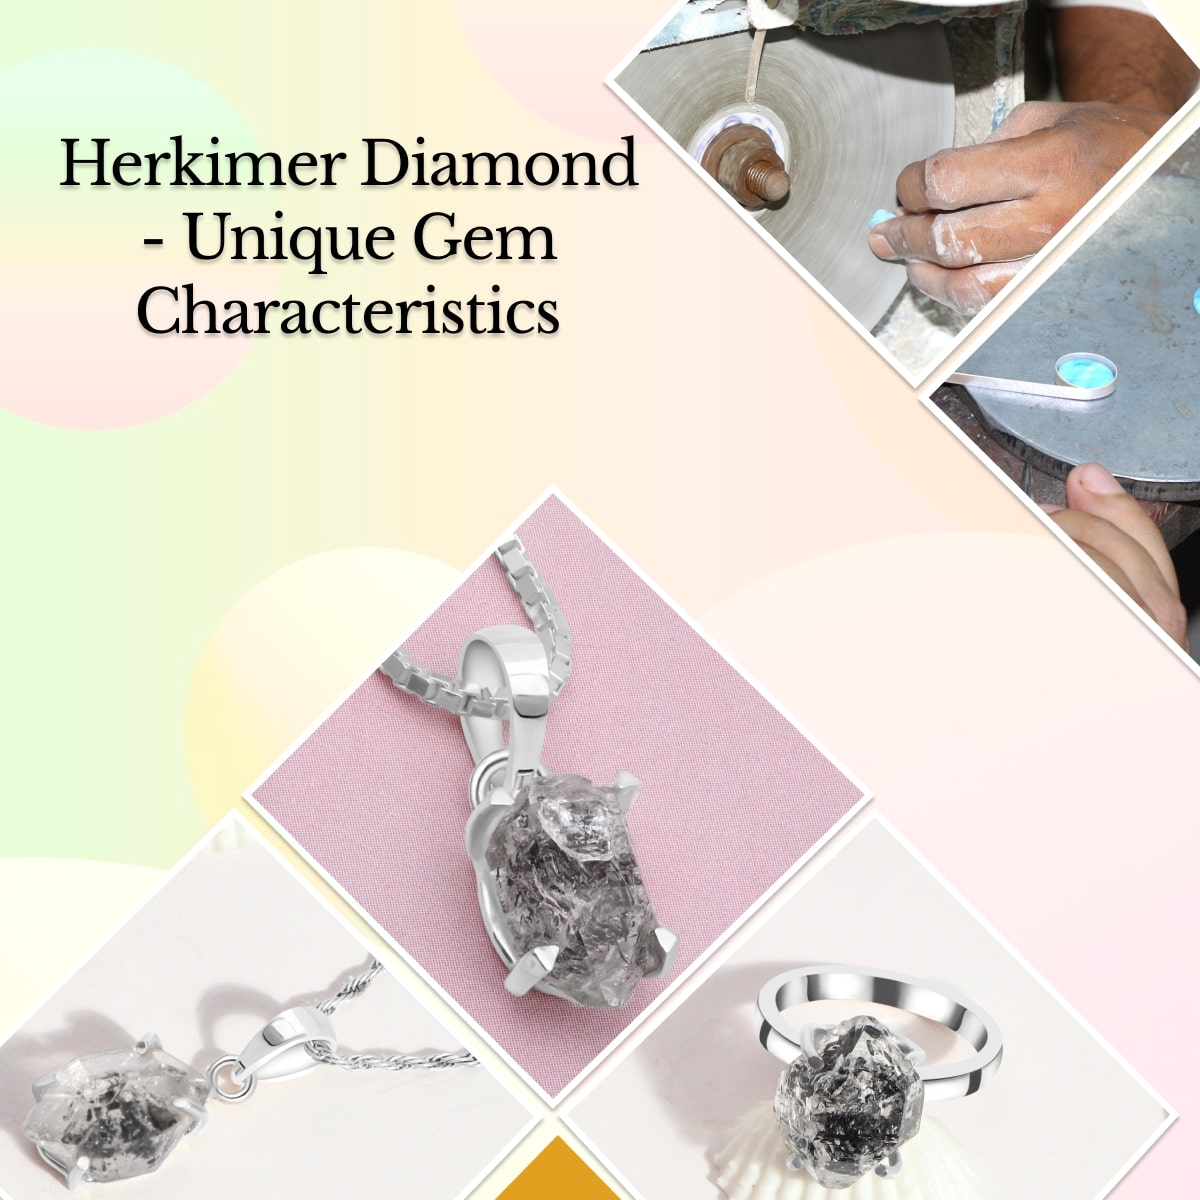 General Traits of Herkimer Diamond